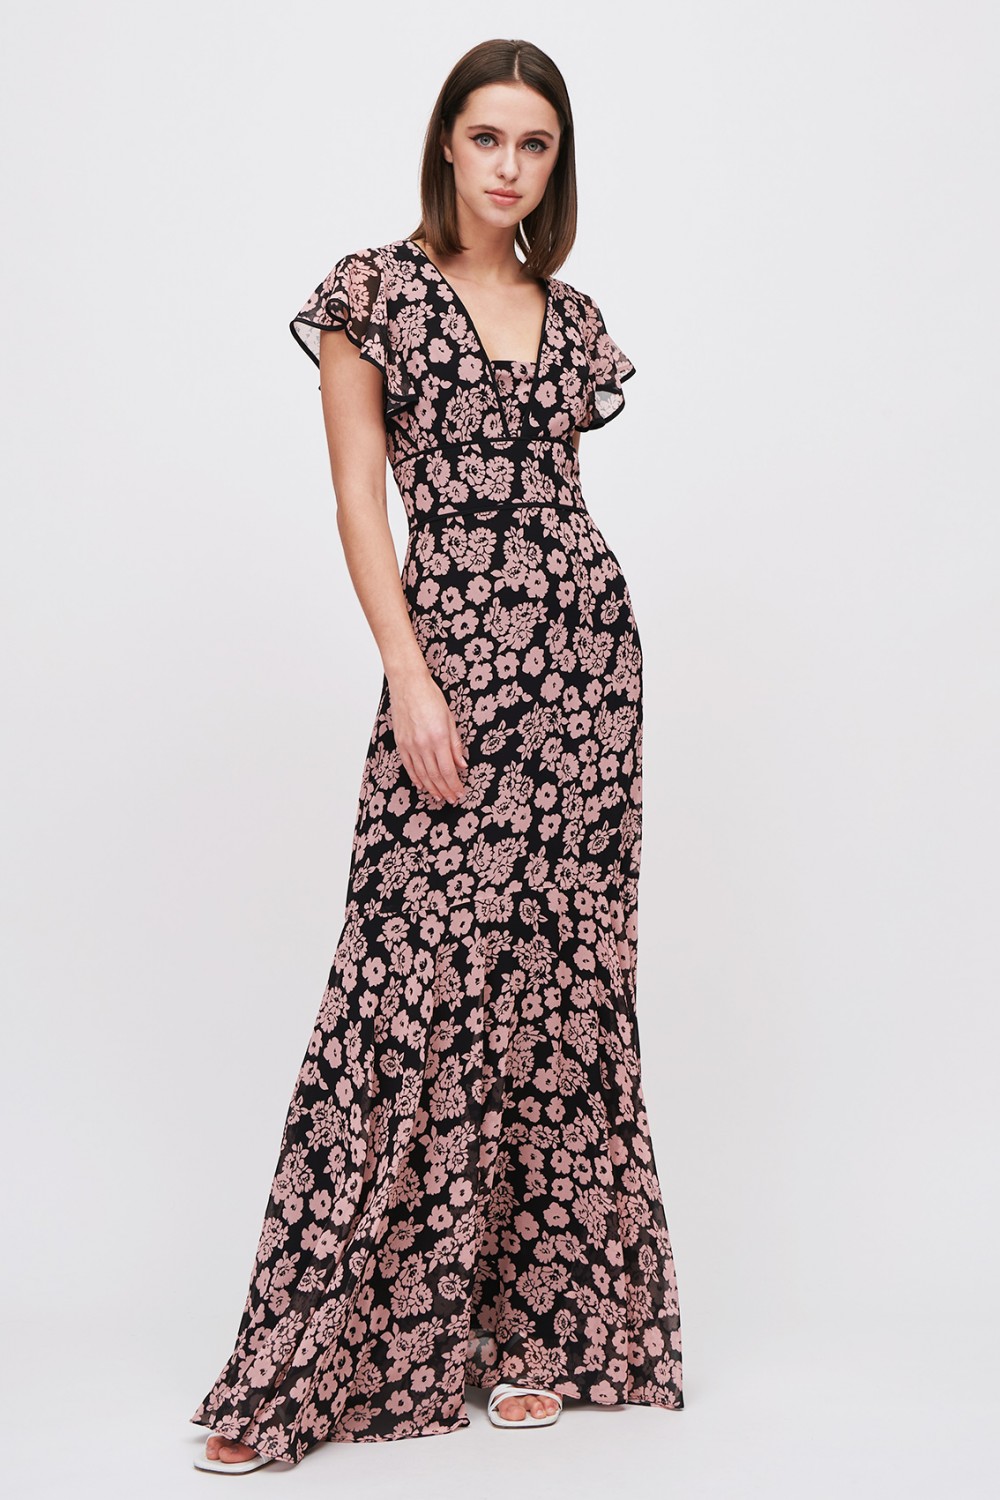 Flower print dress